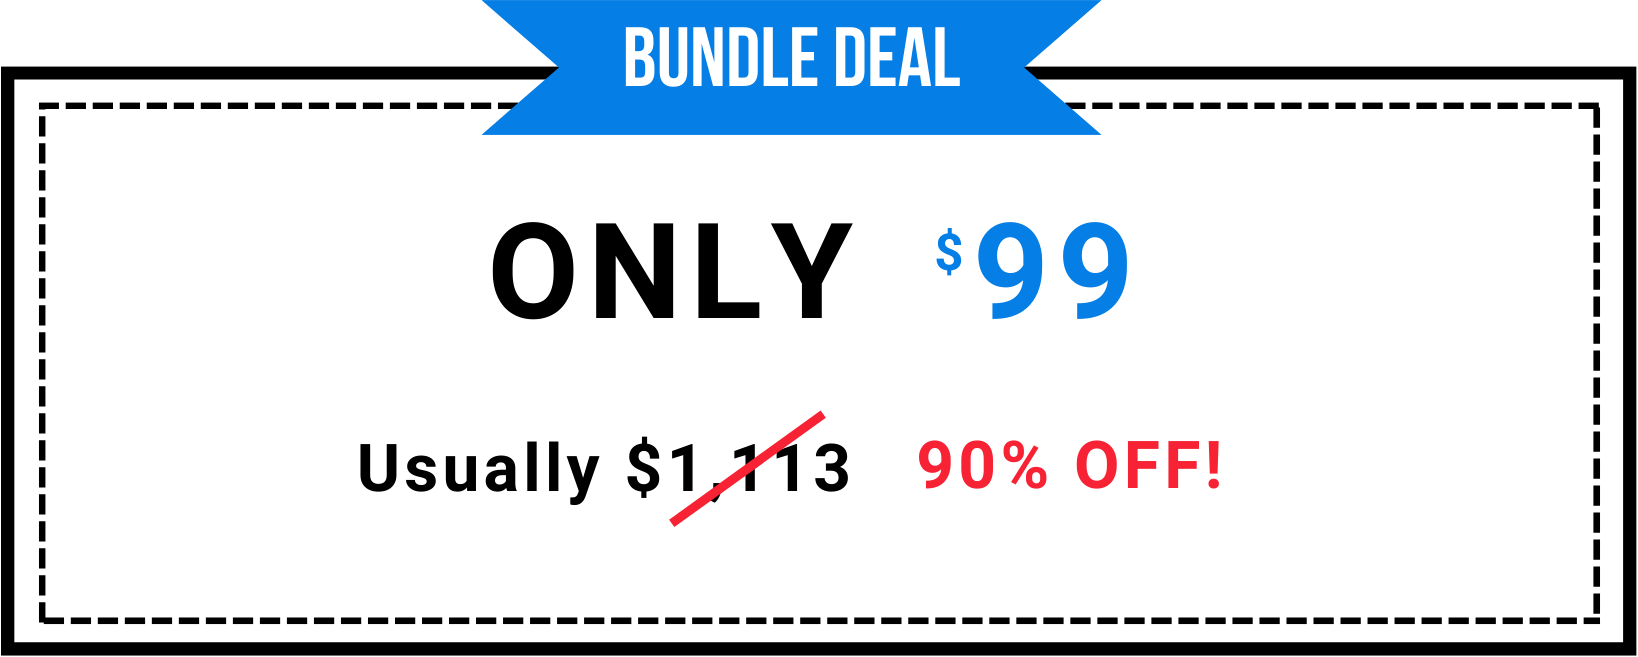 Bundle deal $99